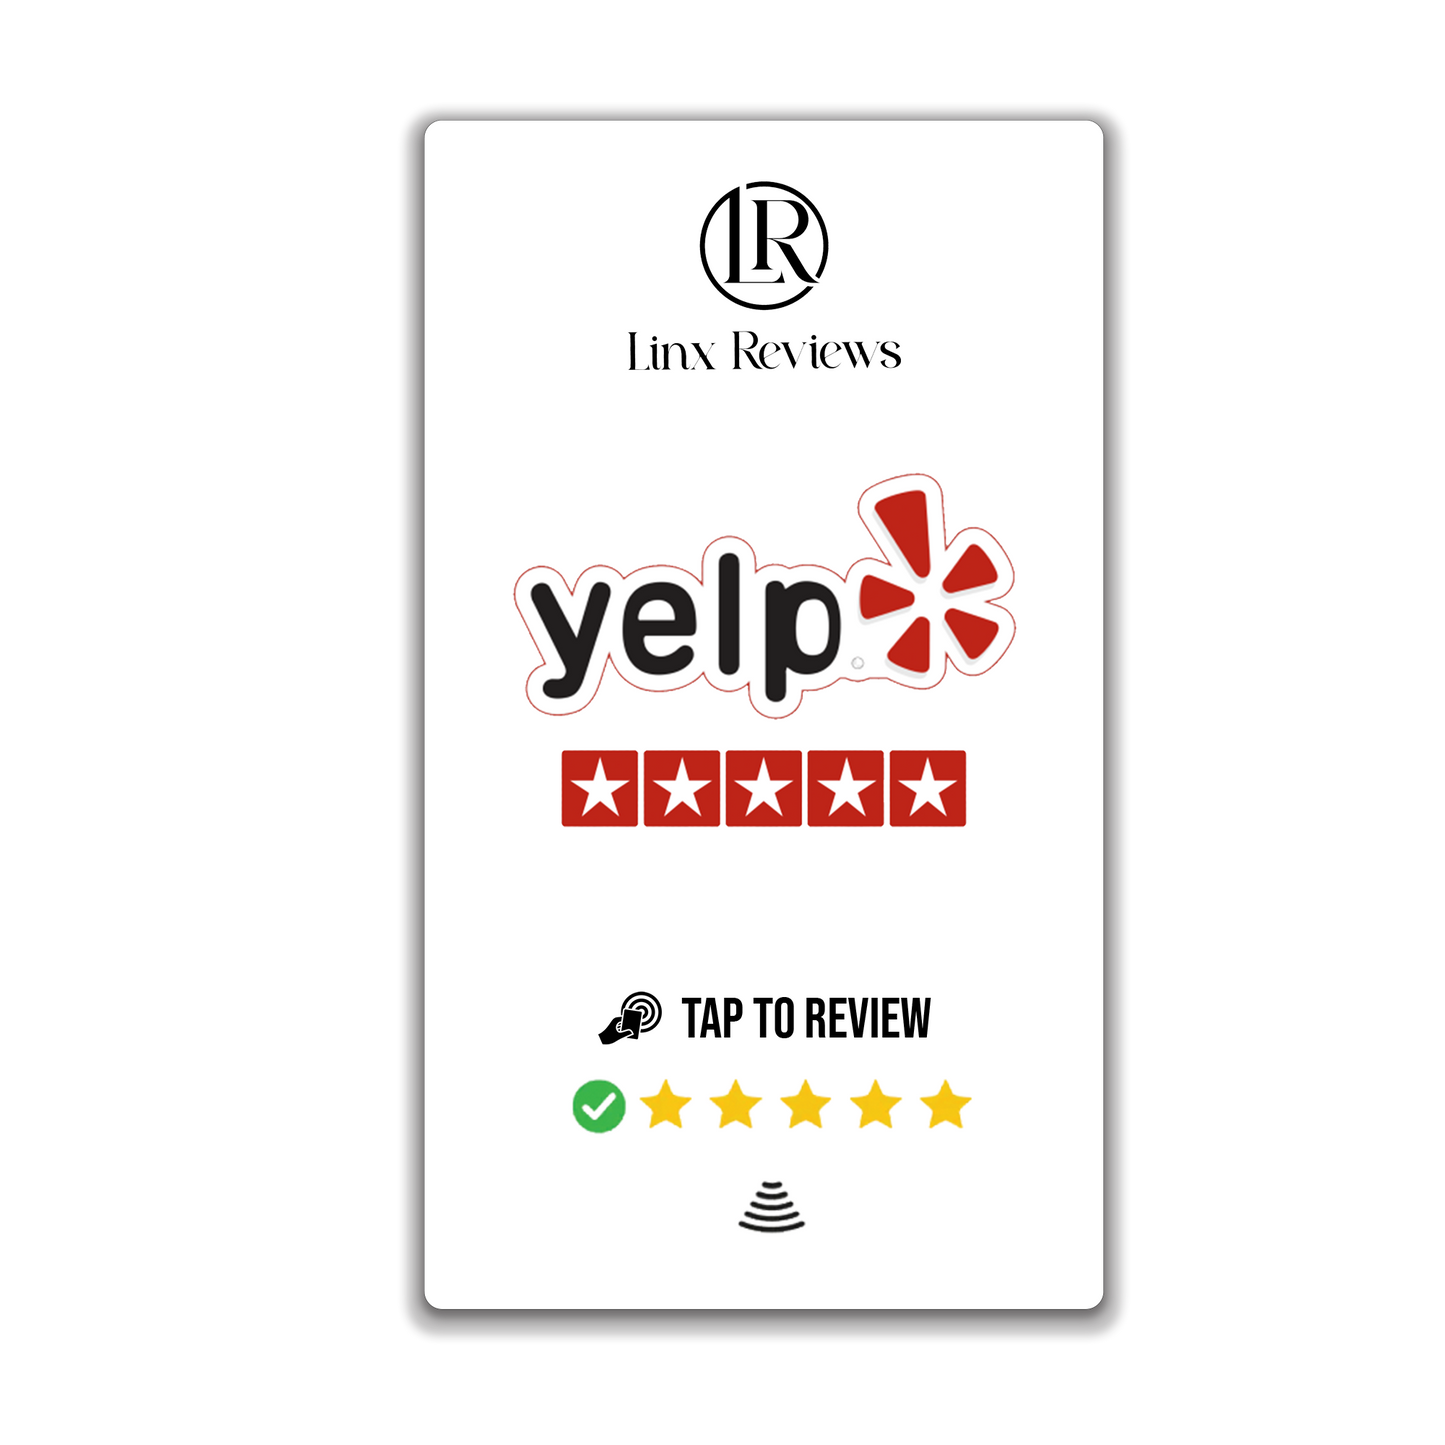 Yelp Customer Reviews Card bundles